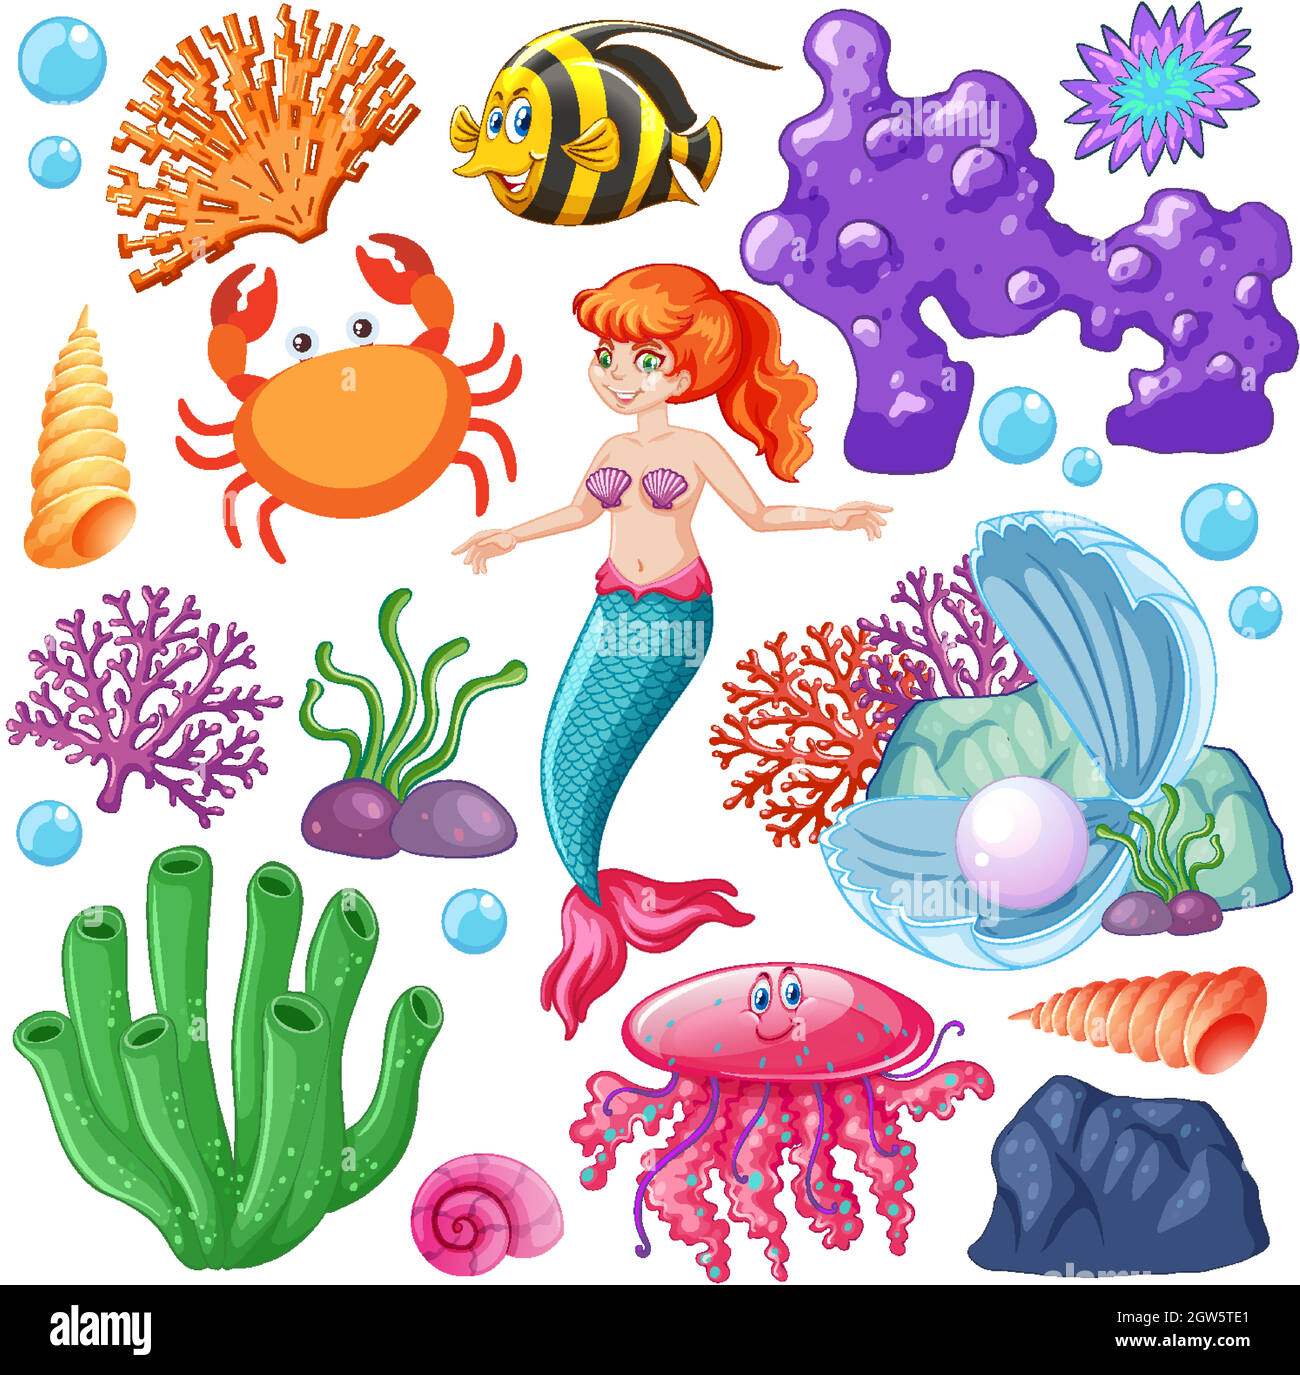 https://c8.alamy.com/comp/2GW5TE1/set-of-sea-animals-and-mermaid-cartoon-character-on-white-background-2GW5TE1.jpg